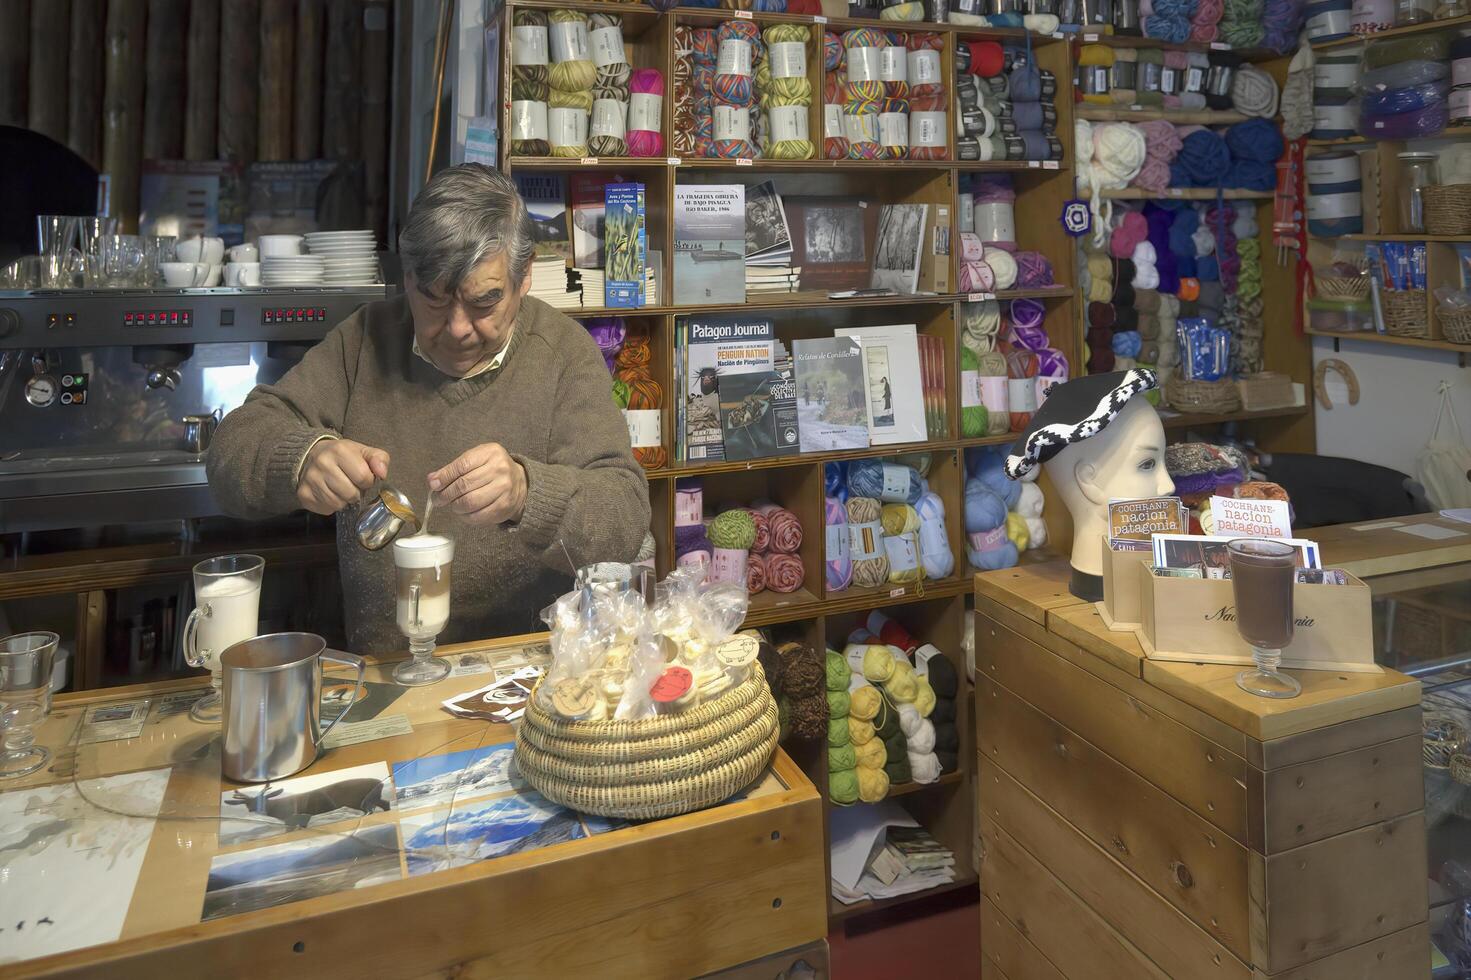 cochrane, Chili, 2019 - winkelier brouwen en portie cappuccino, cochrane dorp, pan-Amerikaans snelweg, aysen regio, Patagonië, Chili foto